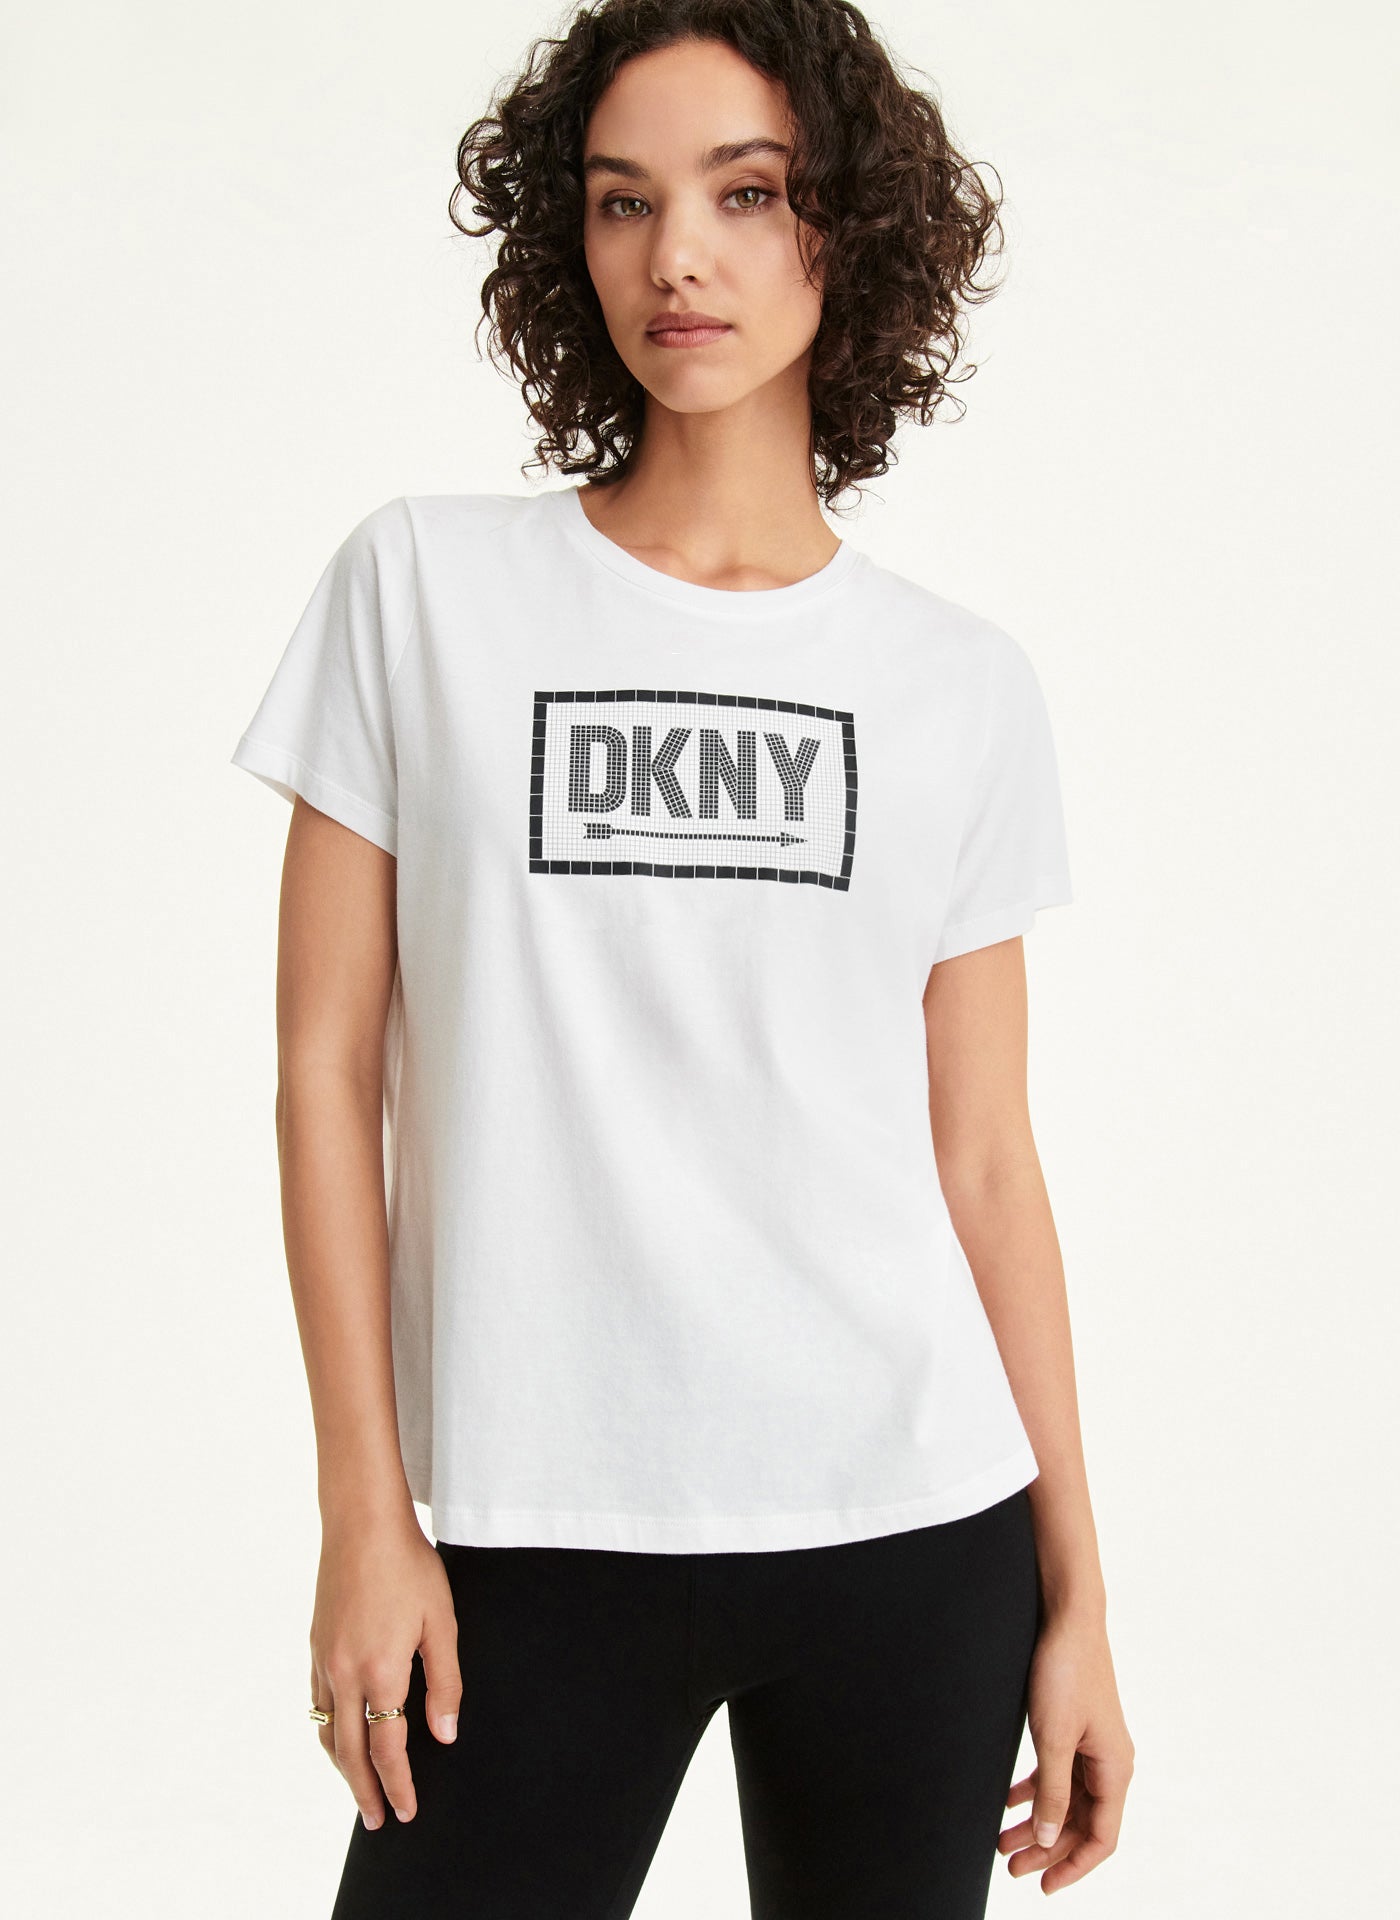 DKNY SUBWAY TILE GRAPHIC TEE,White